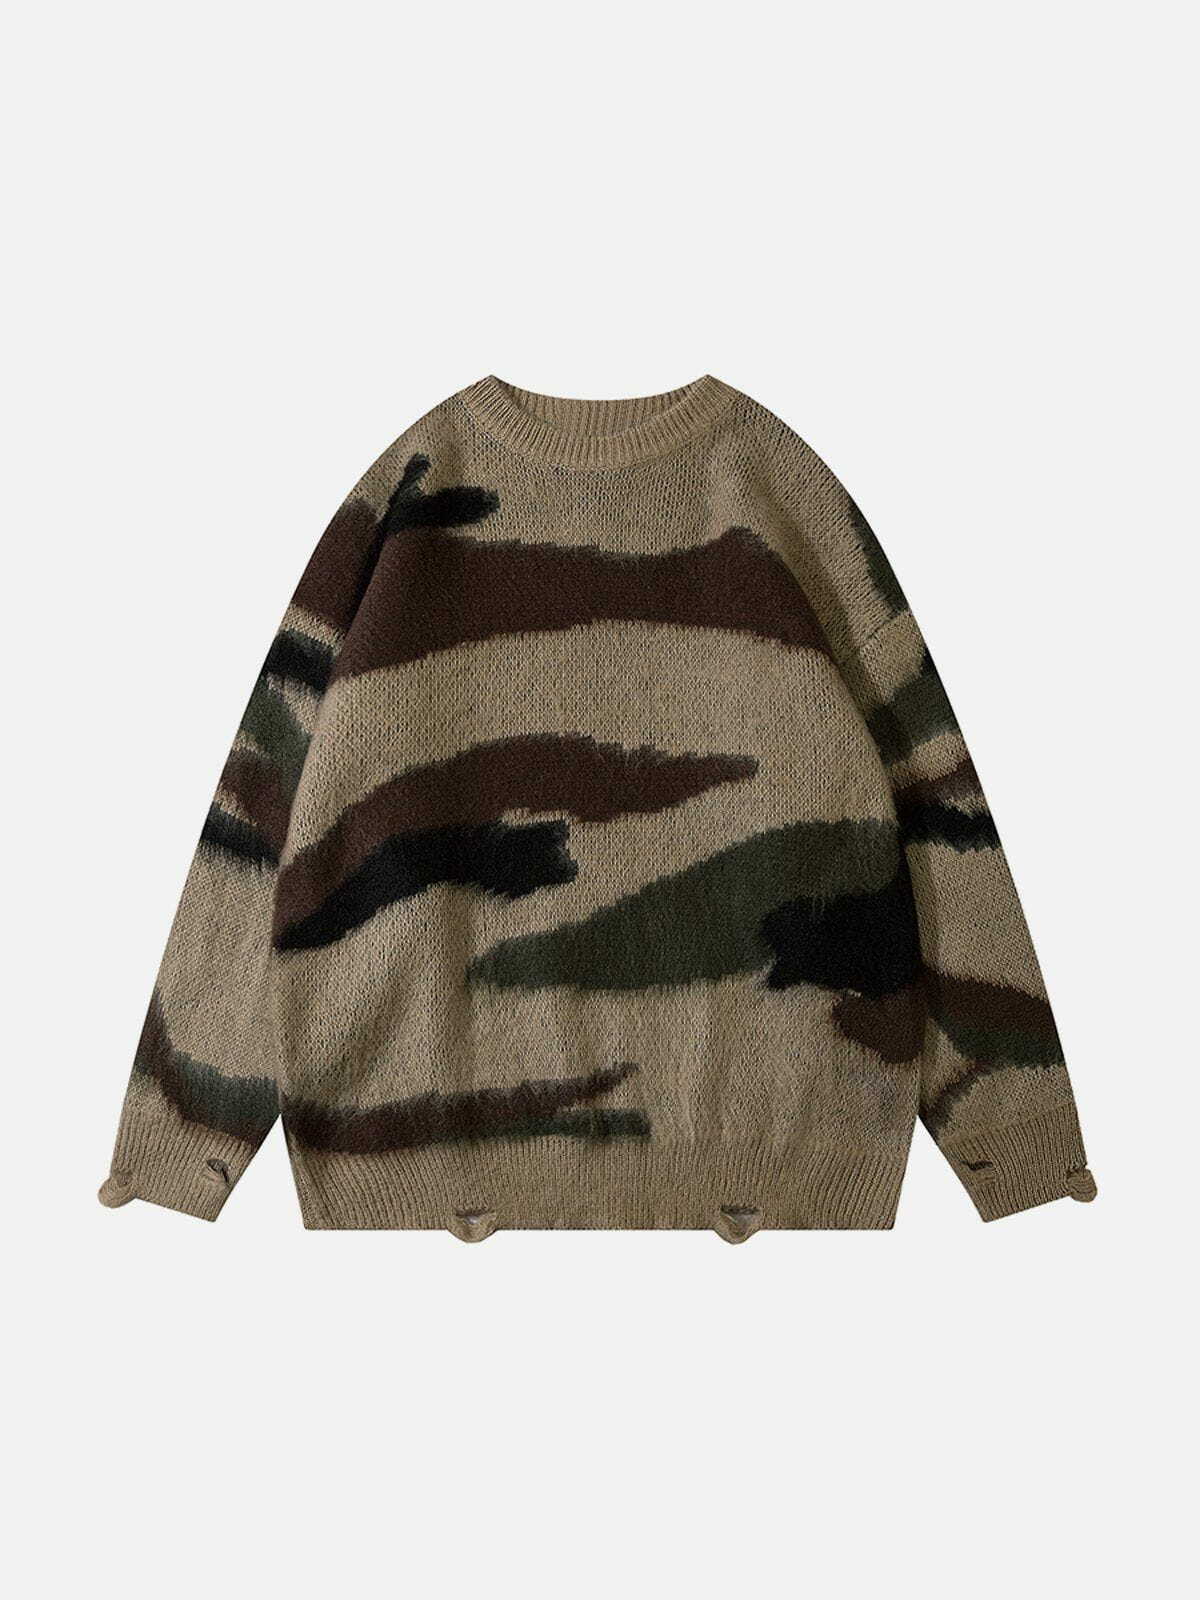 camouflage crewneck sweater urban camo streetwear 7268